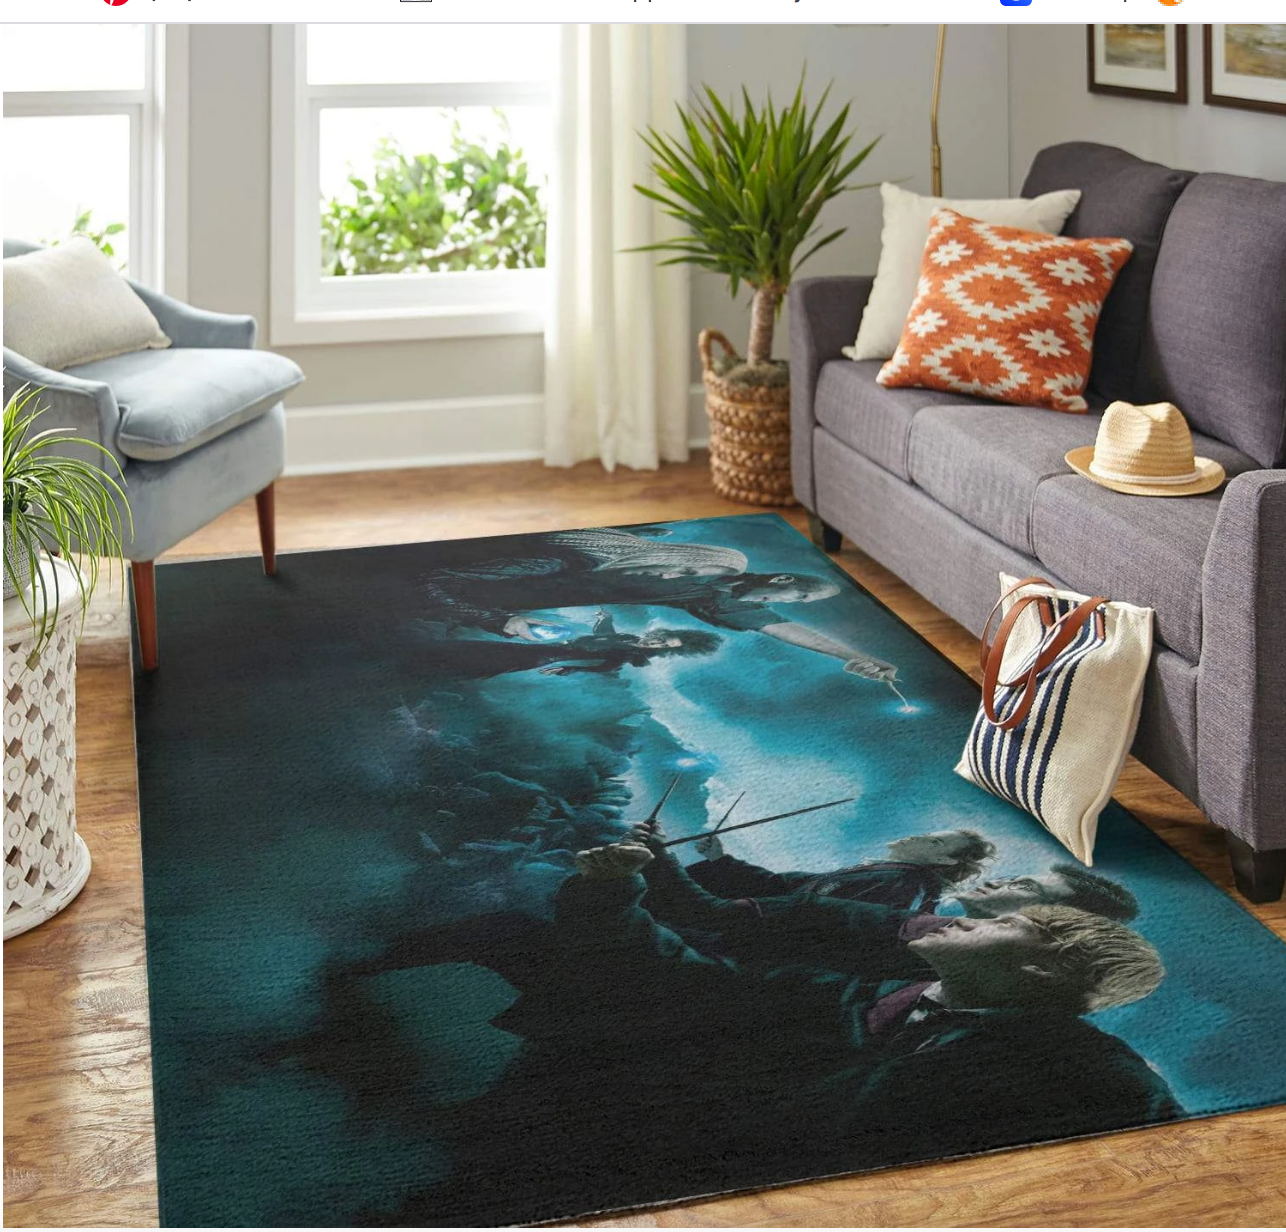 Harry Potter Hd Art Carpet Area Rug Floor Home Room Decor Room Décor